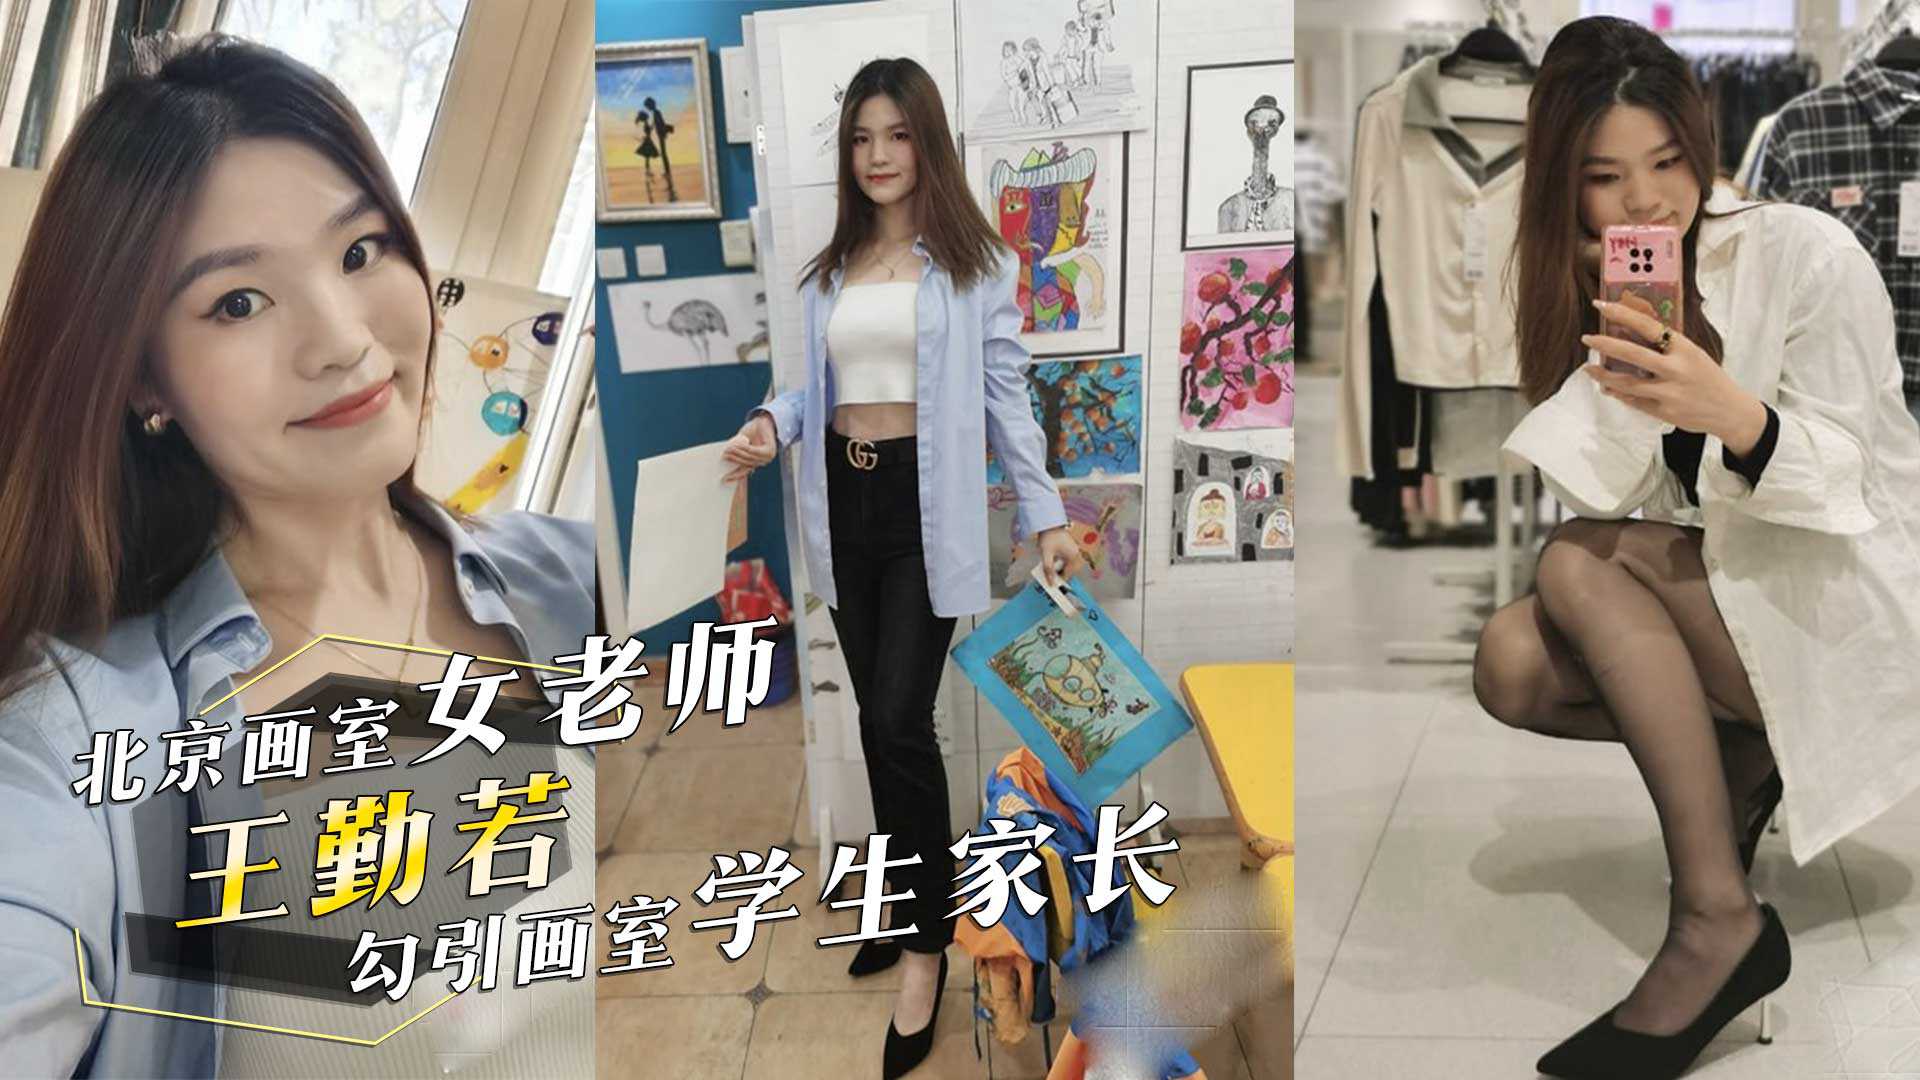 Beijing Painting Room School Woman's Teacher 'King' Traits Painting Room Students Parents!